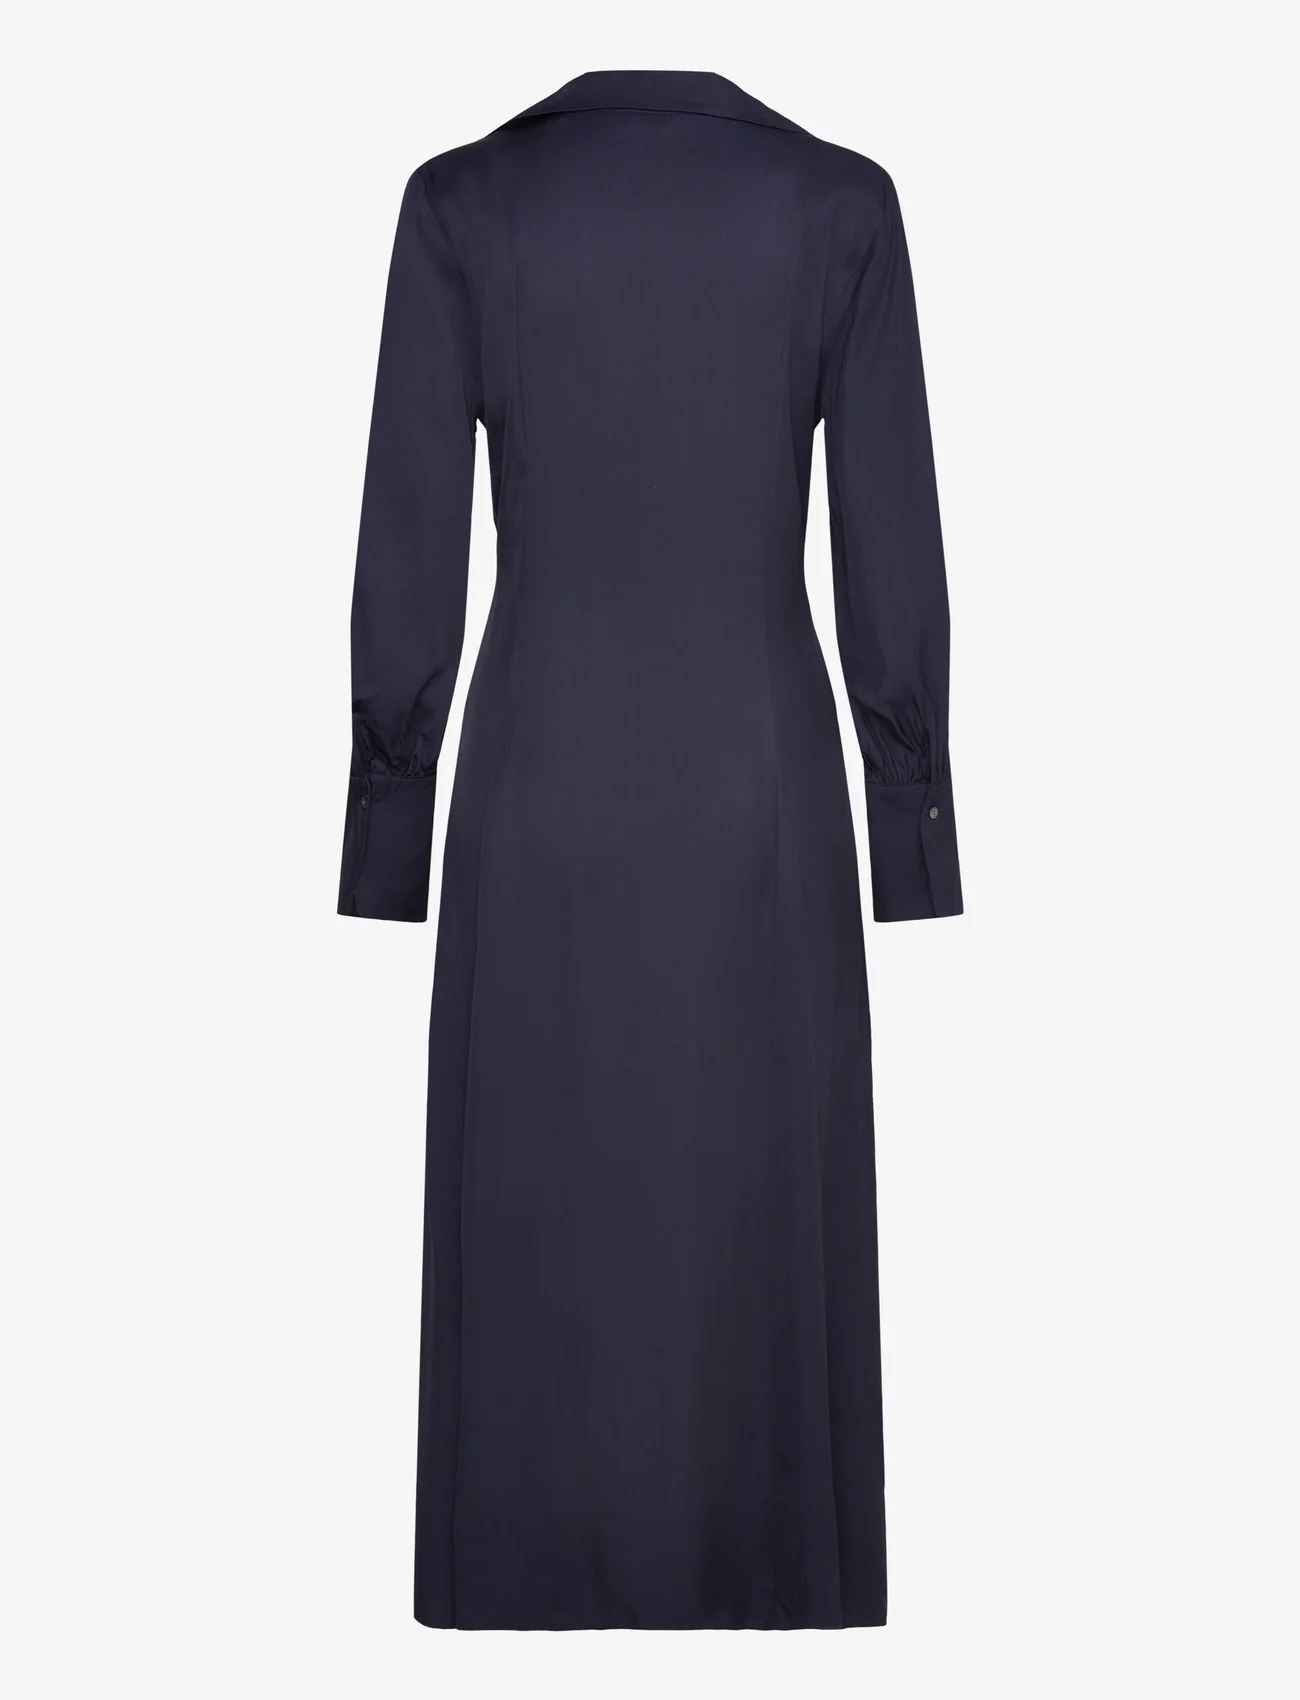 GANT - SLIM HIGH CUFF DRESS - midi dresses - evening blue - 1